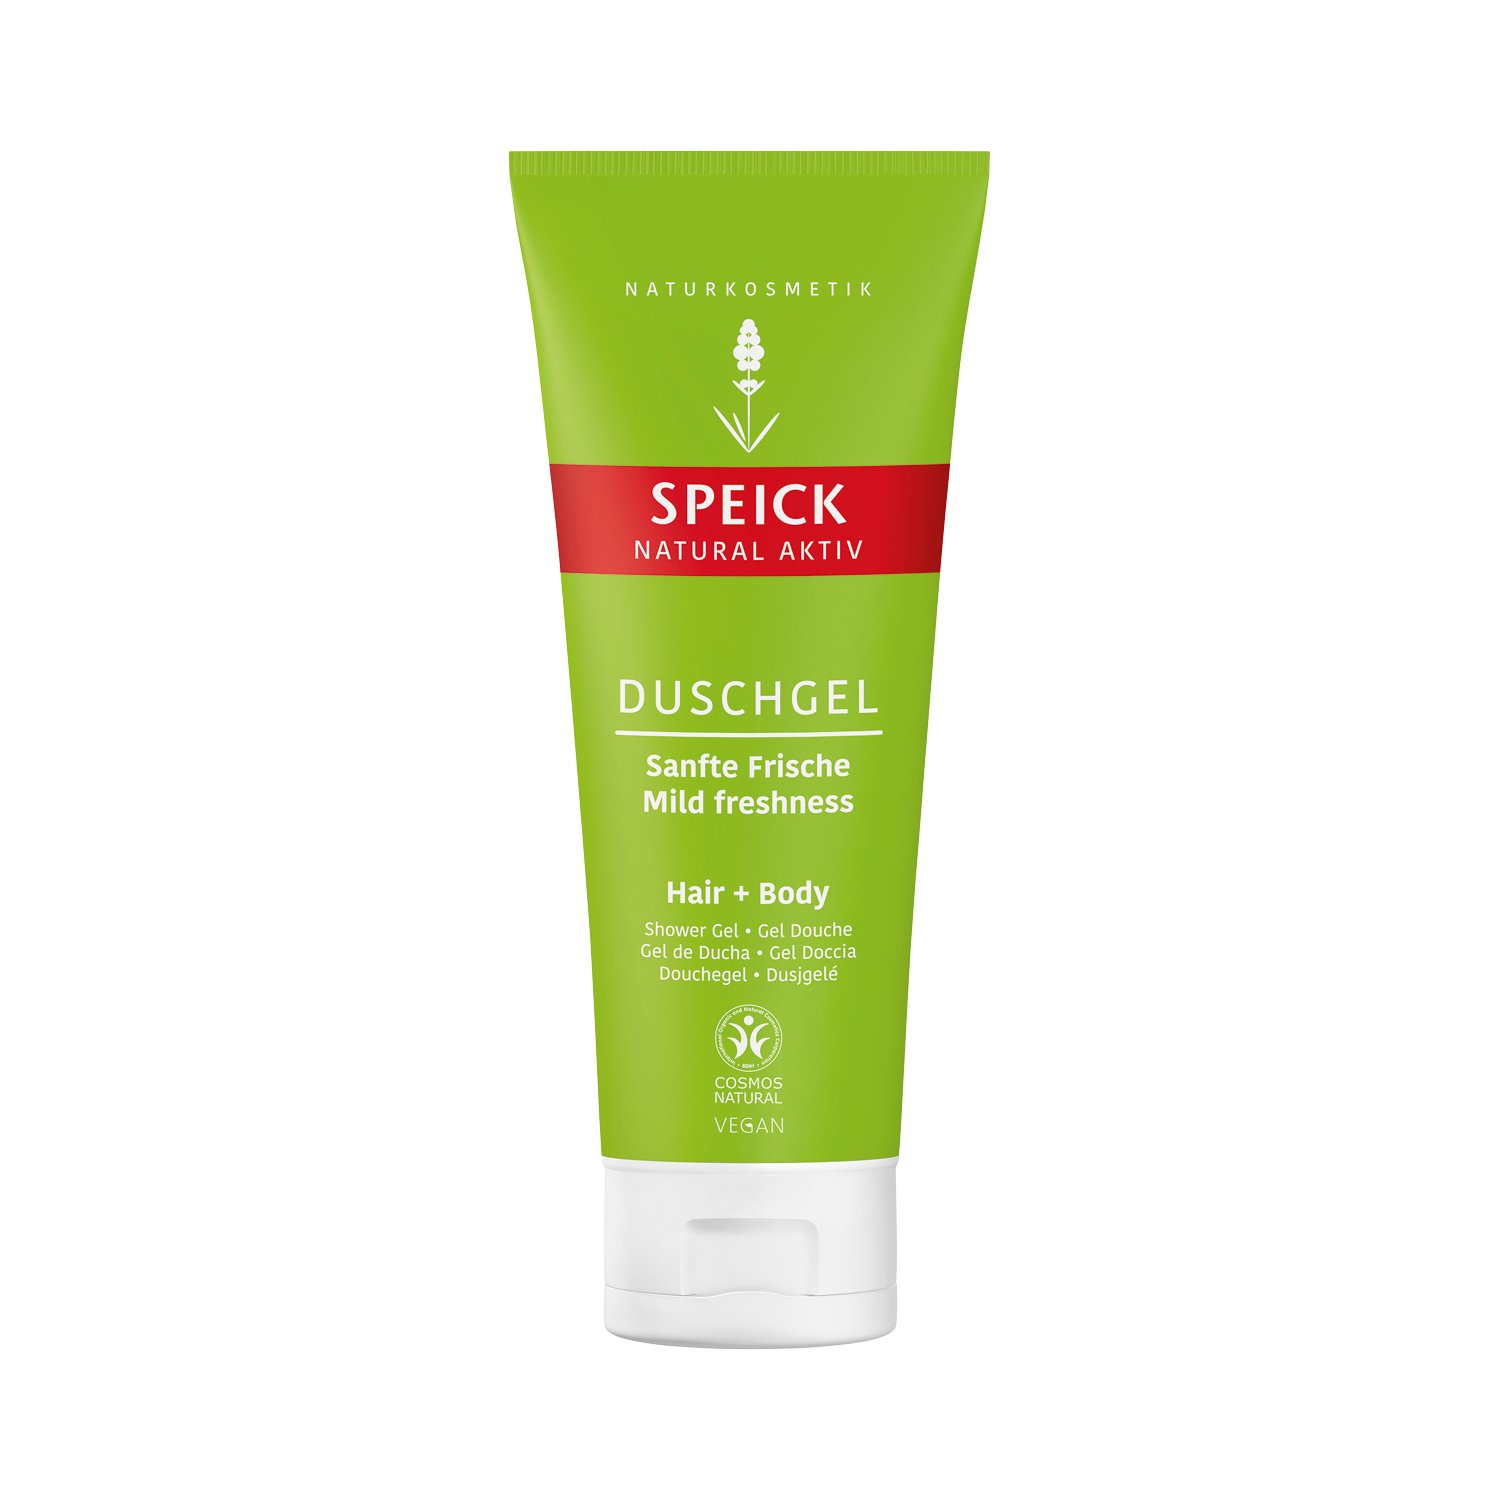 Speick - Natural Aktiv - Duschgel Hair + Body